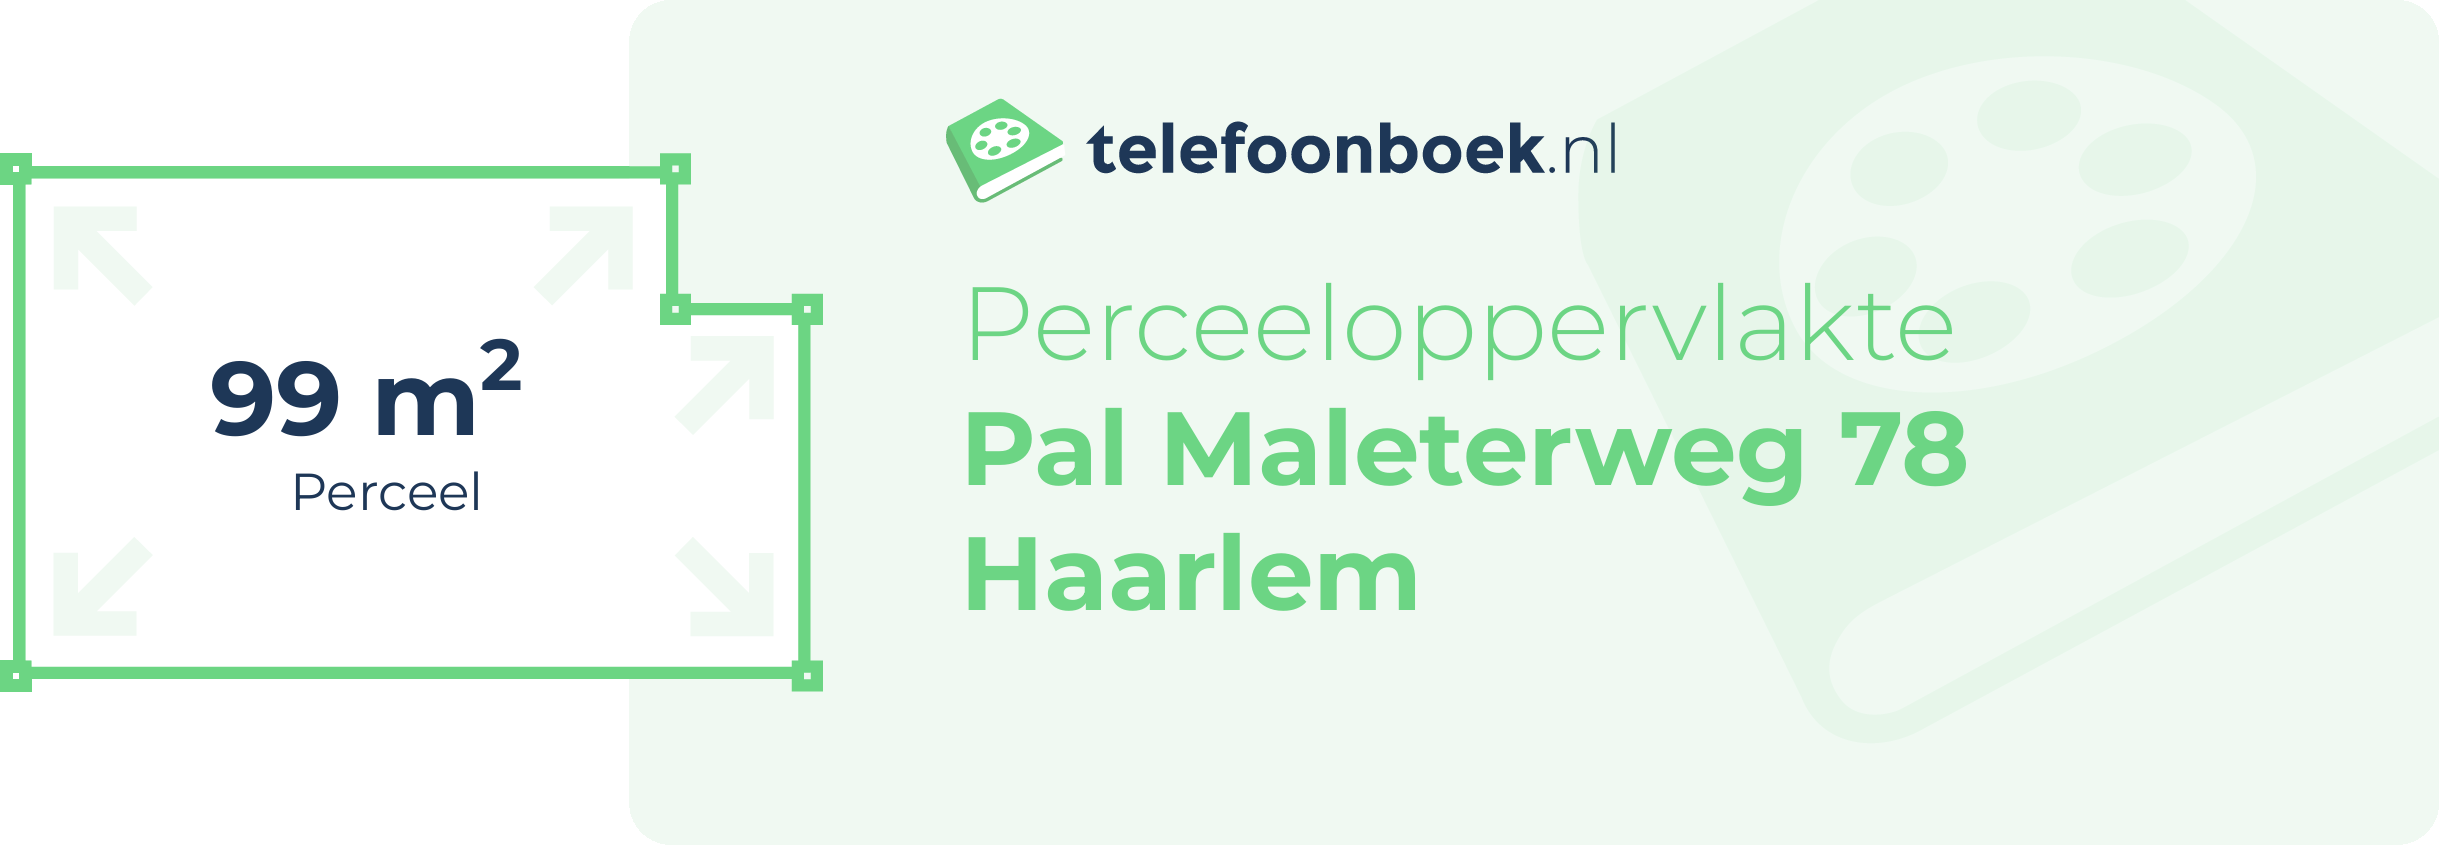 Perceeloppervlakte Pal Maleterweg 78 Haarlem